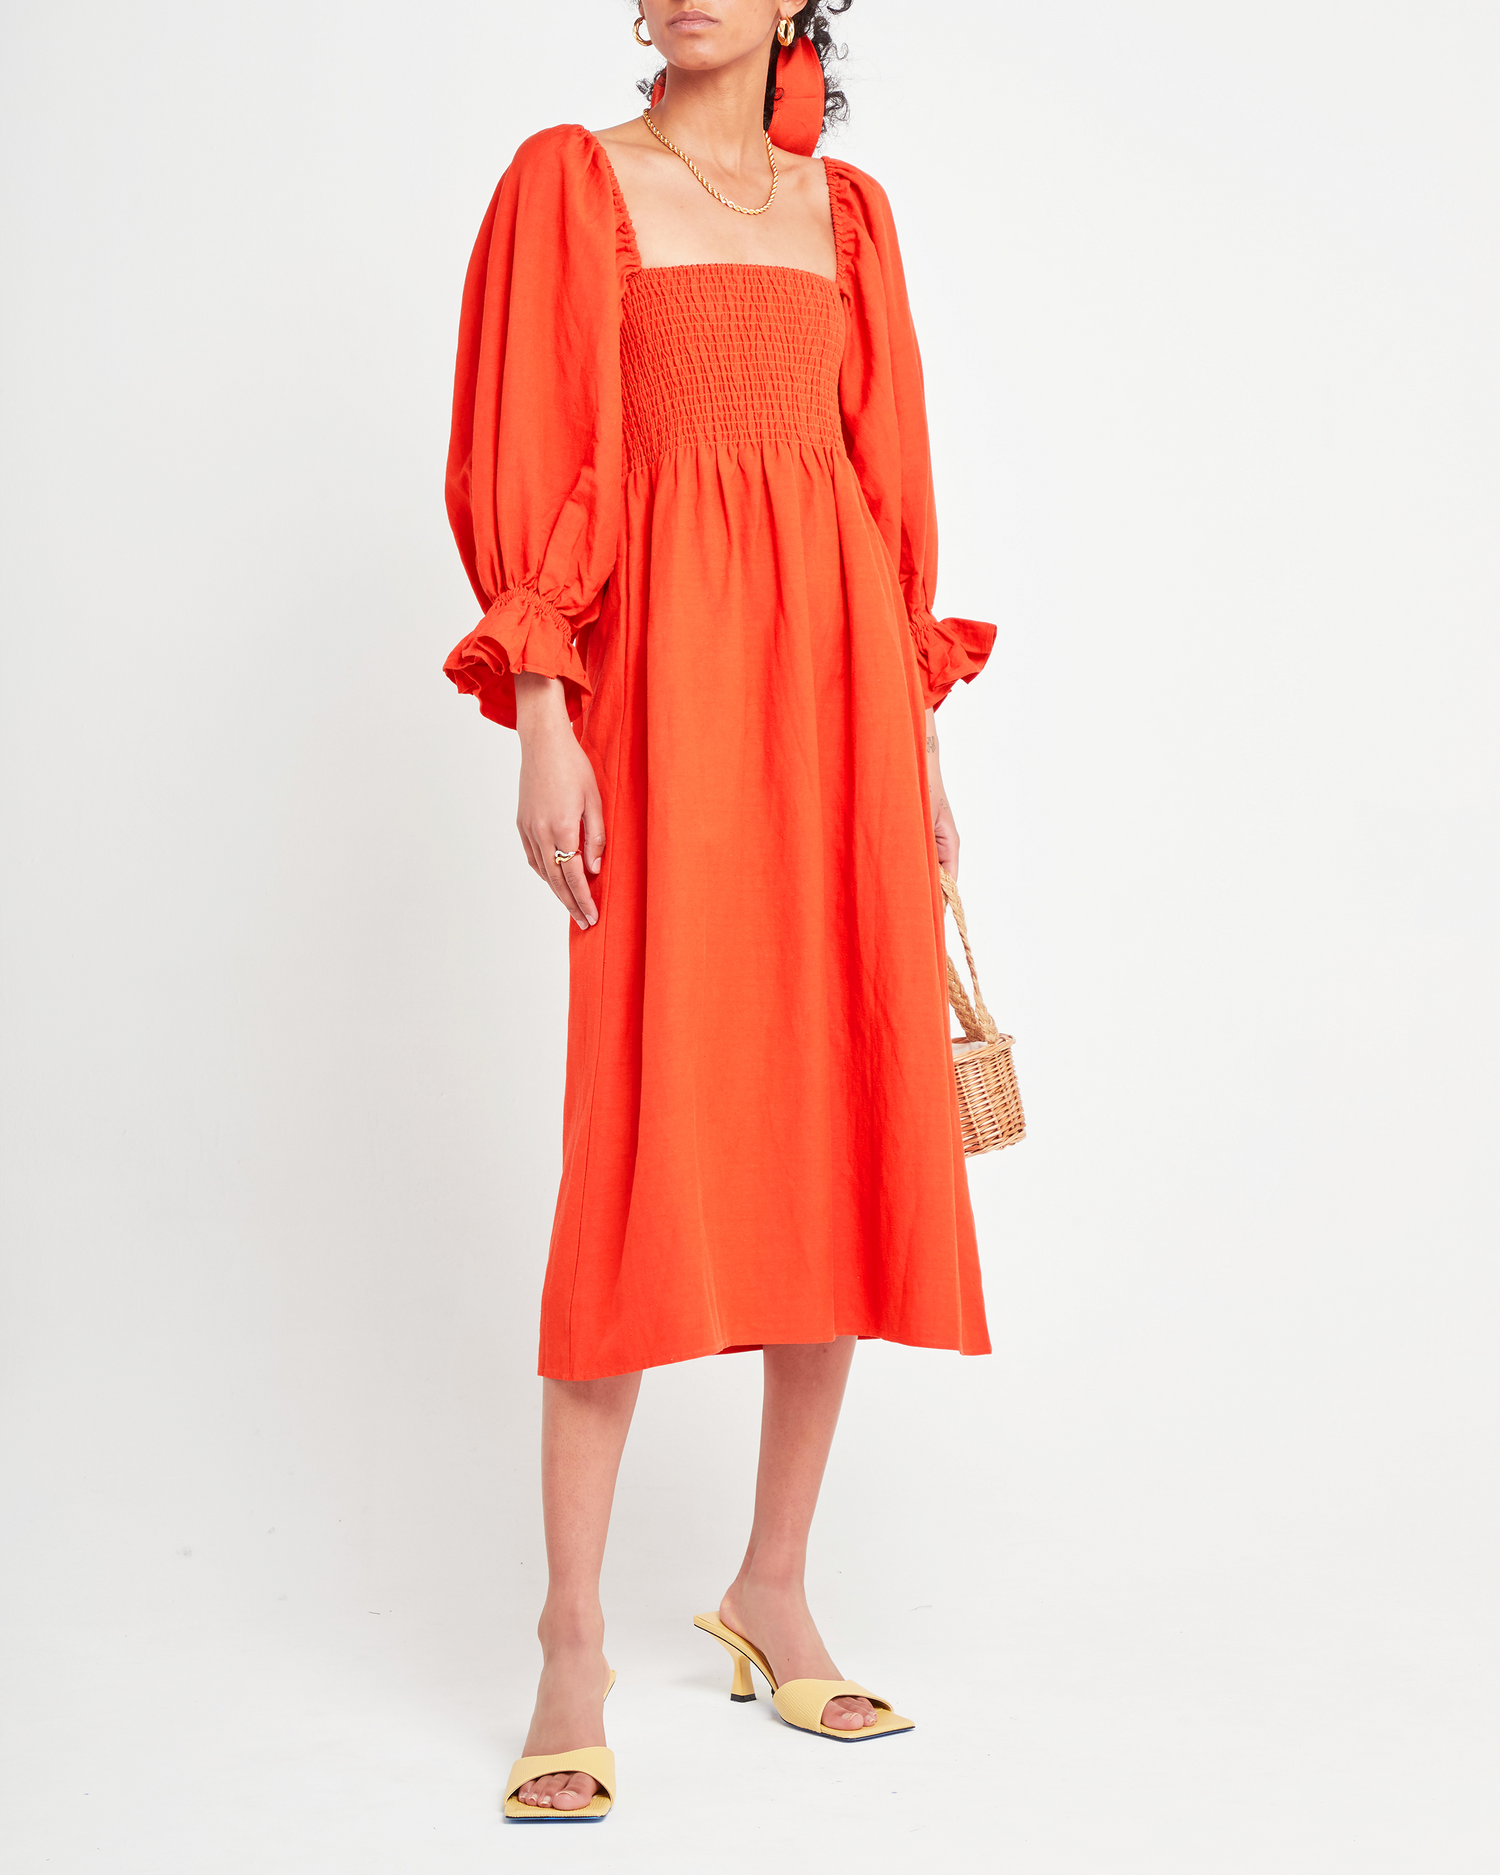 Fourth image of Athena Dress, a orange midi dress, long puff sleeves, smocked, square neckline